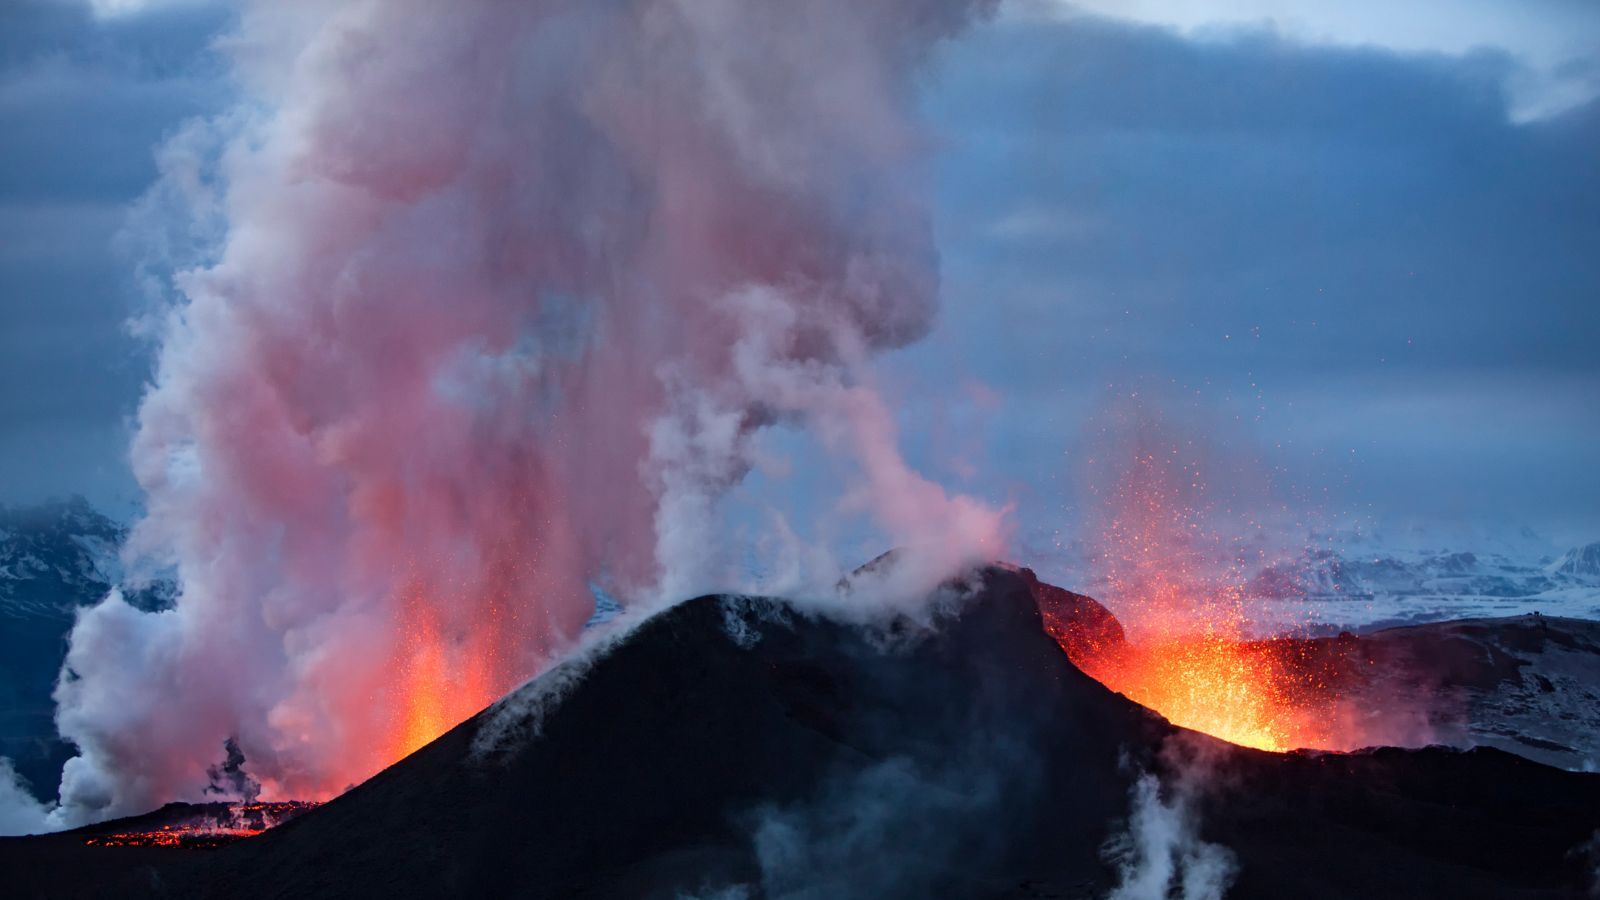 Can supervolcano explosions create meteotsunami waves?